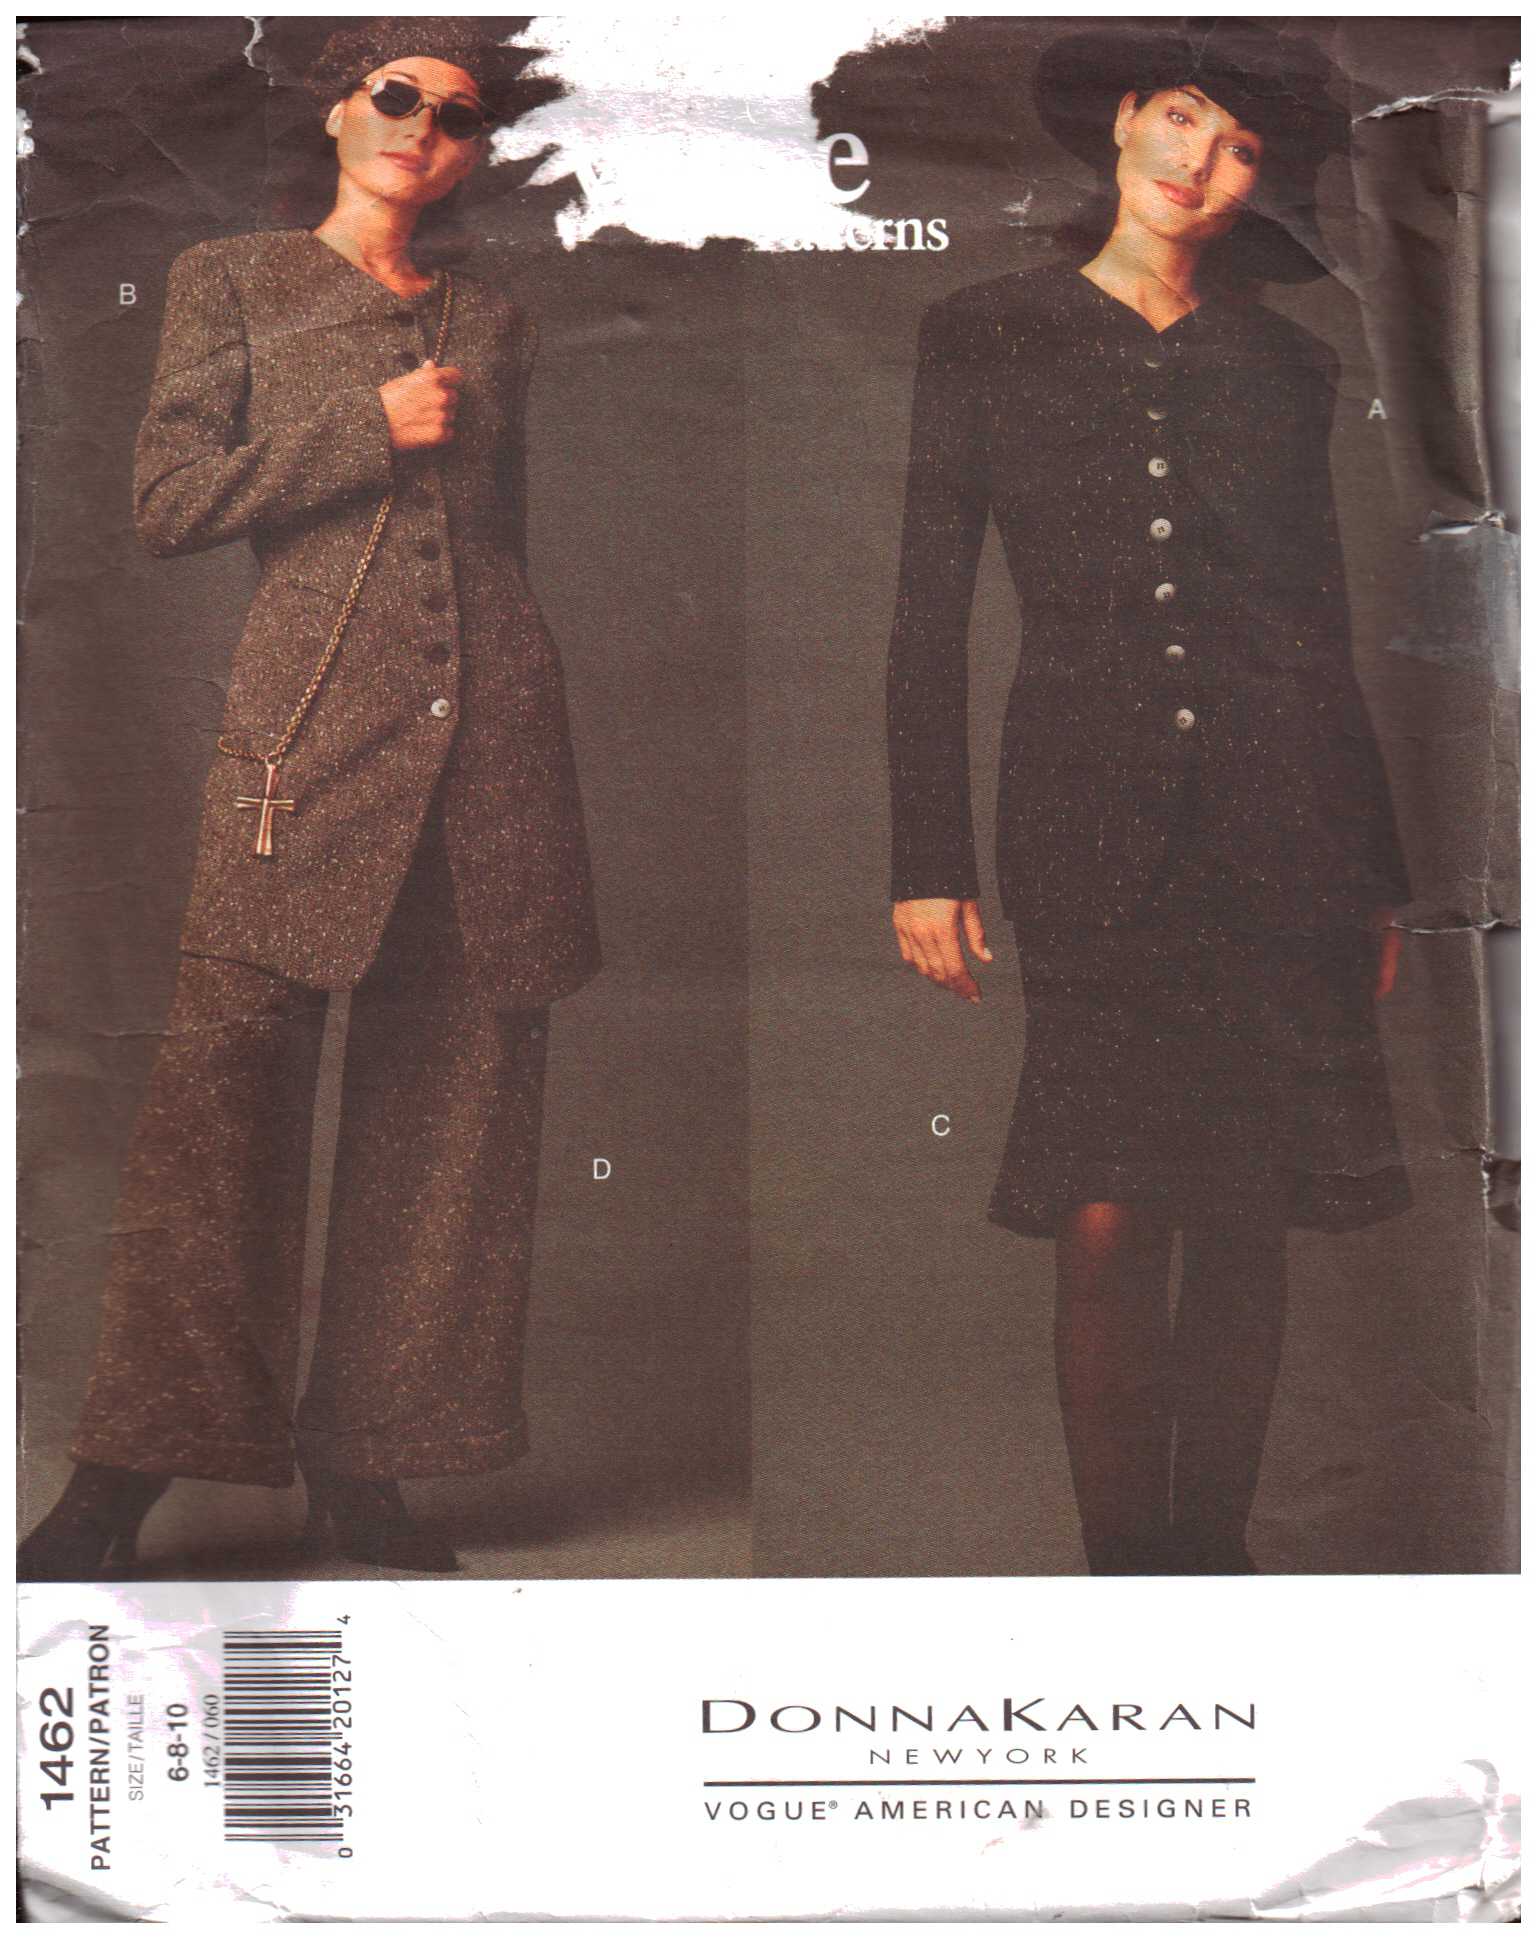 Vogue 1293 Donna Karan 90s Bodysuit Dress Pattern Size 